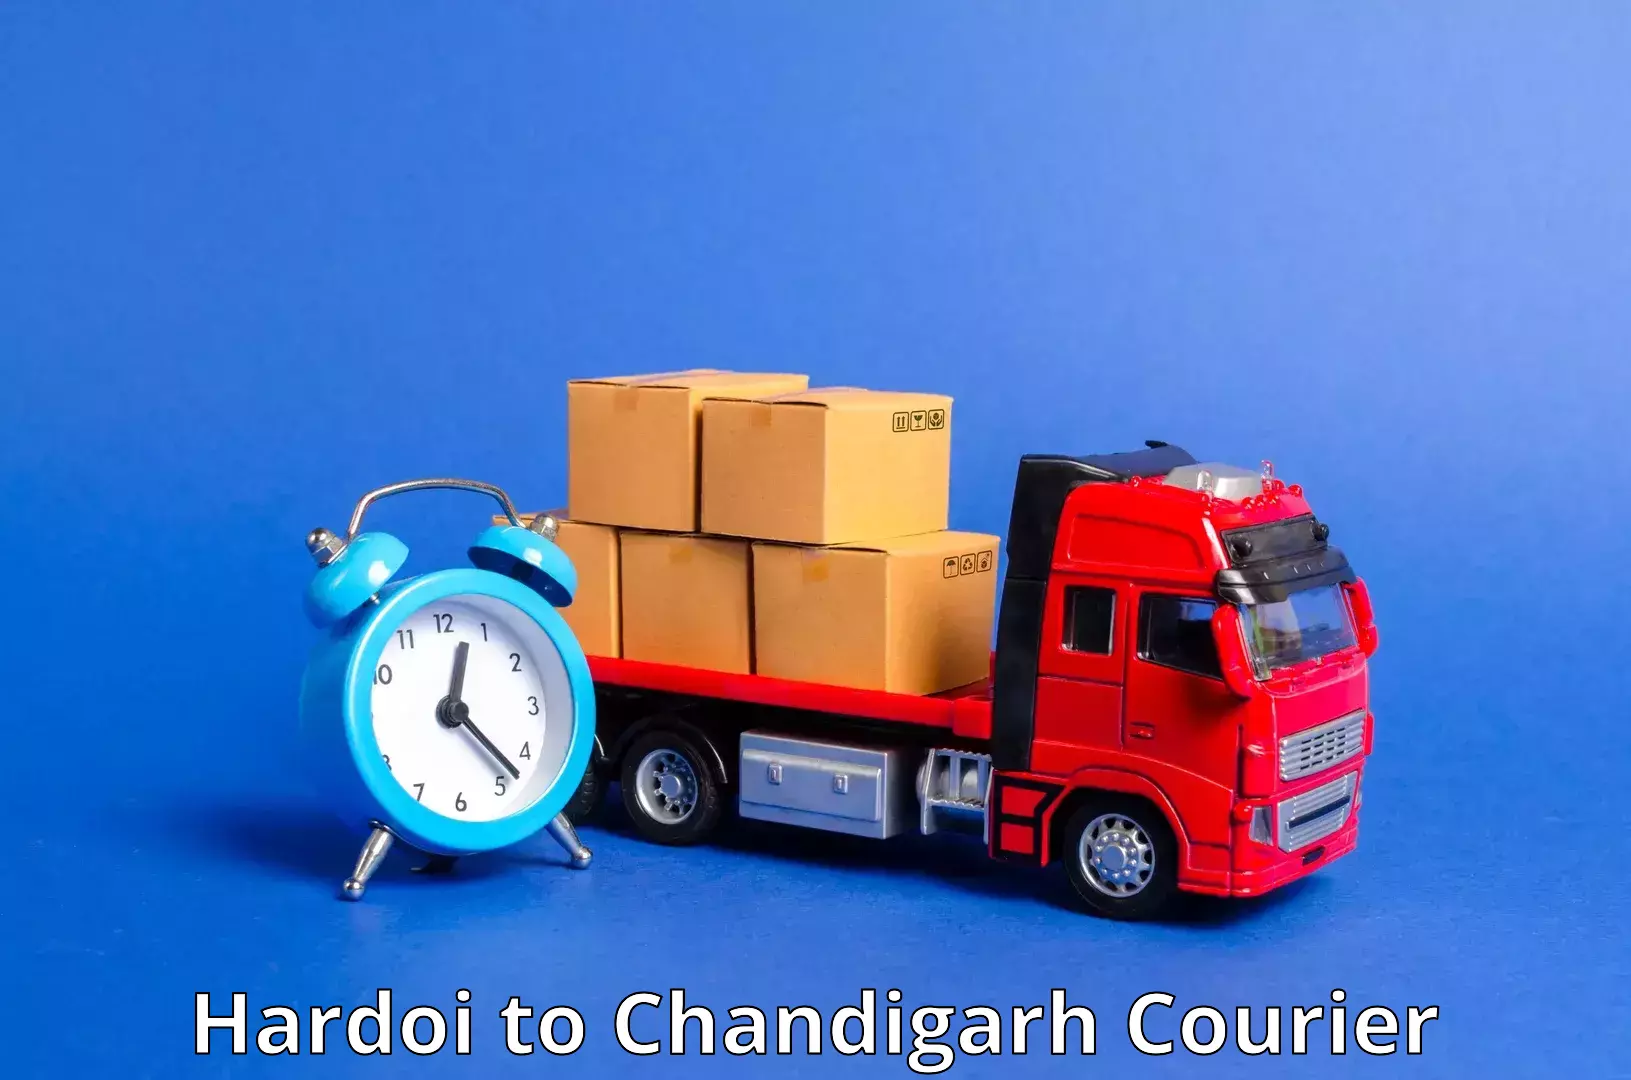 Doorstep delivery service Hardoi to Chandigarh